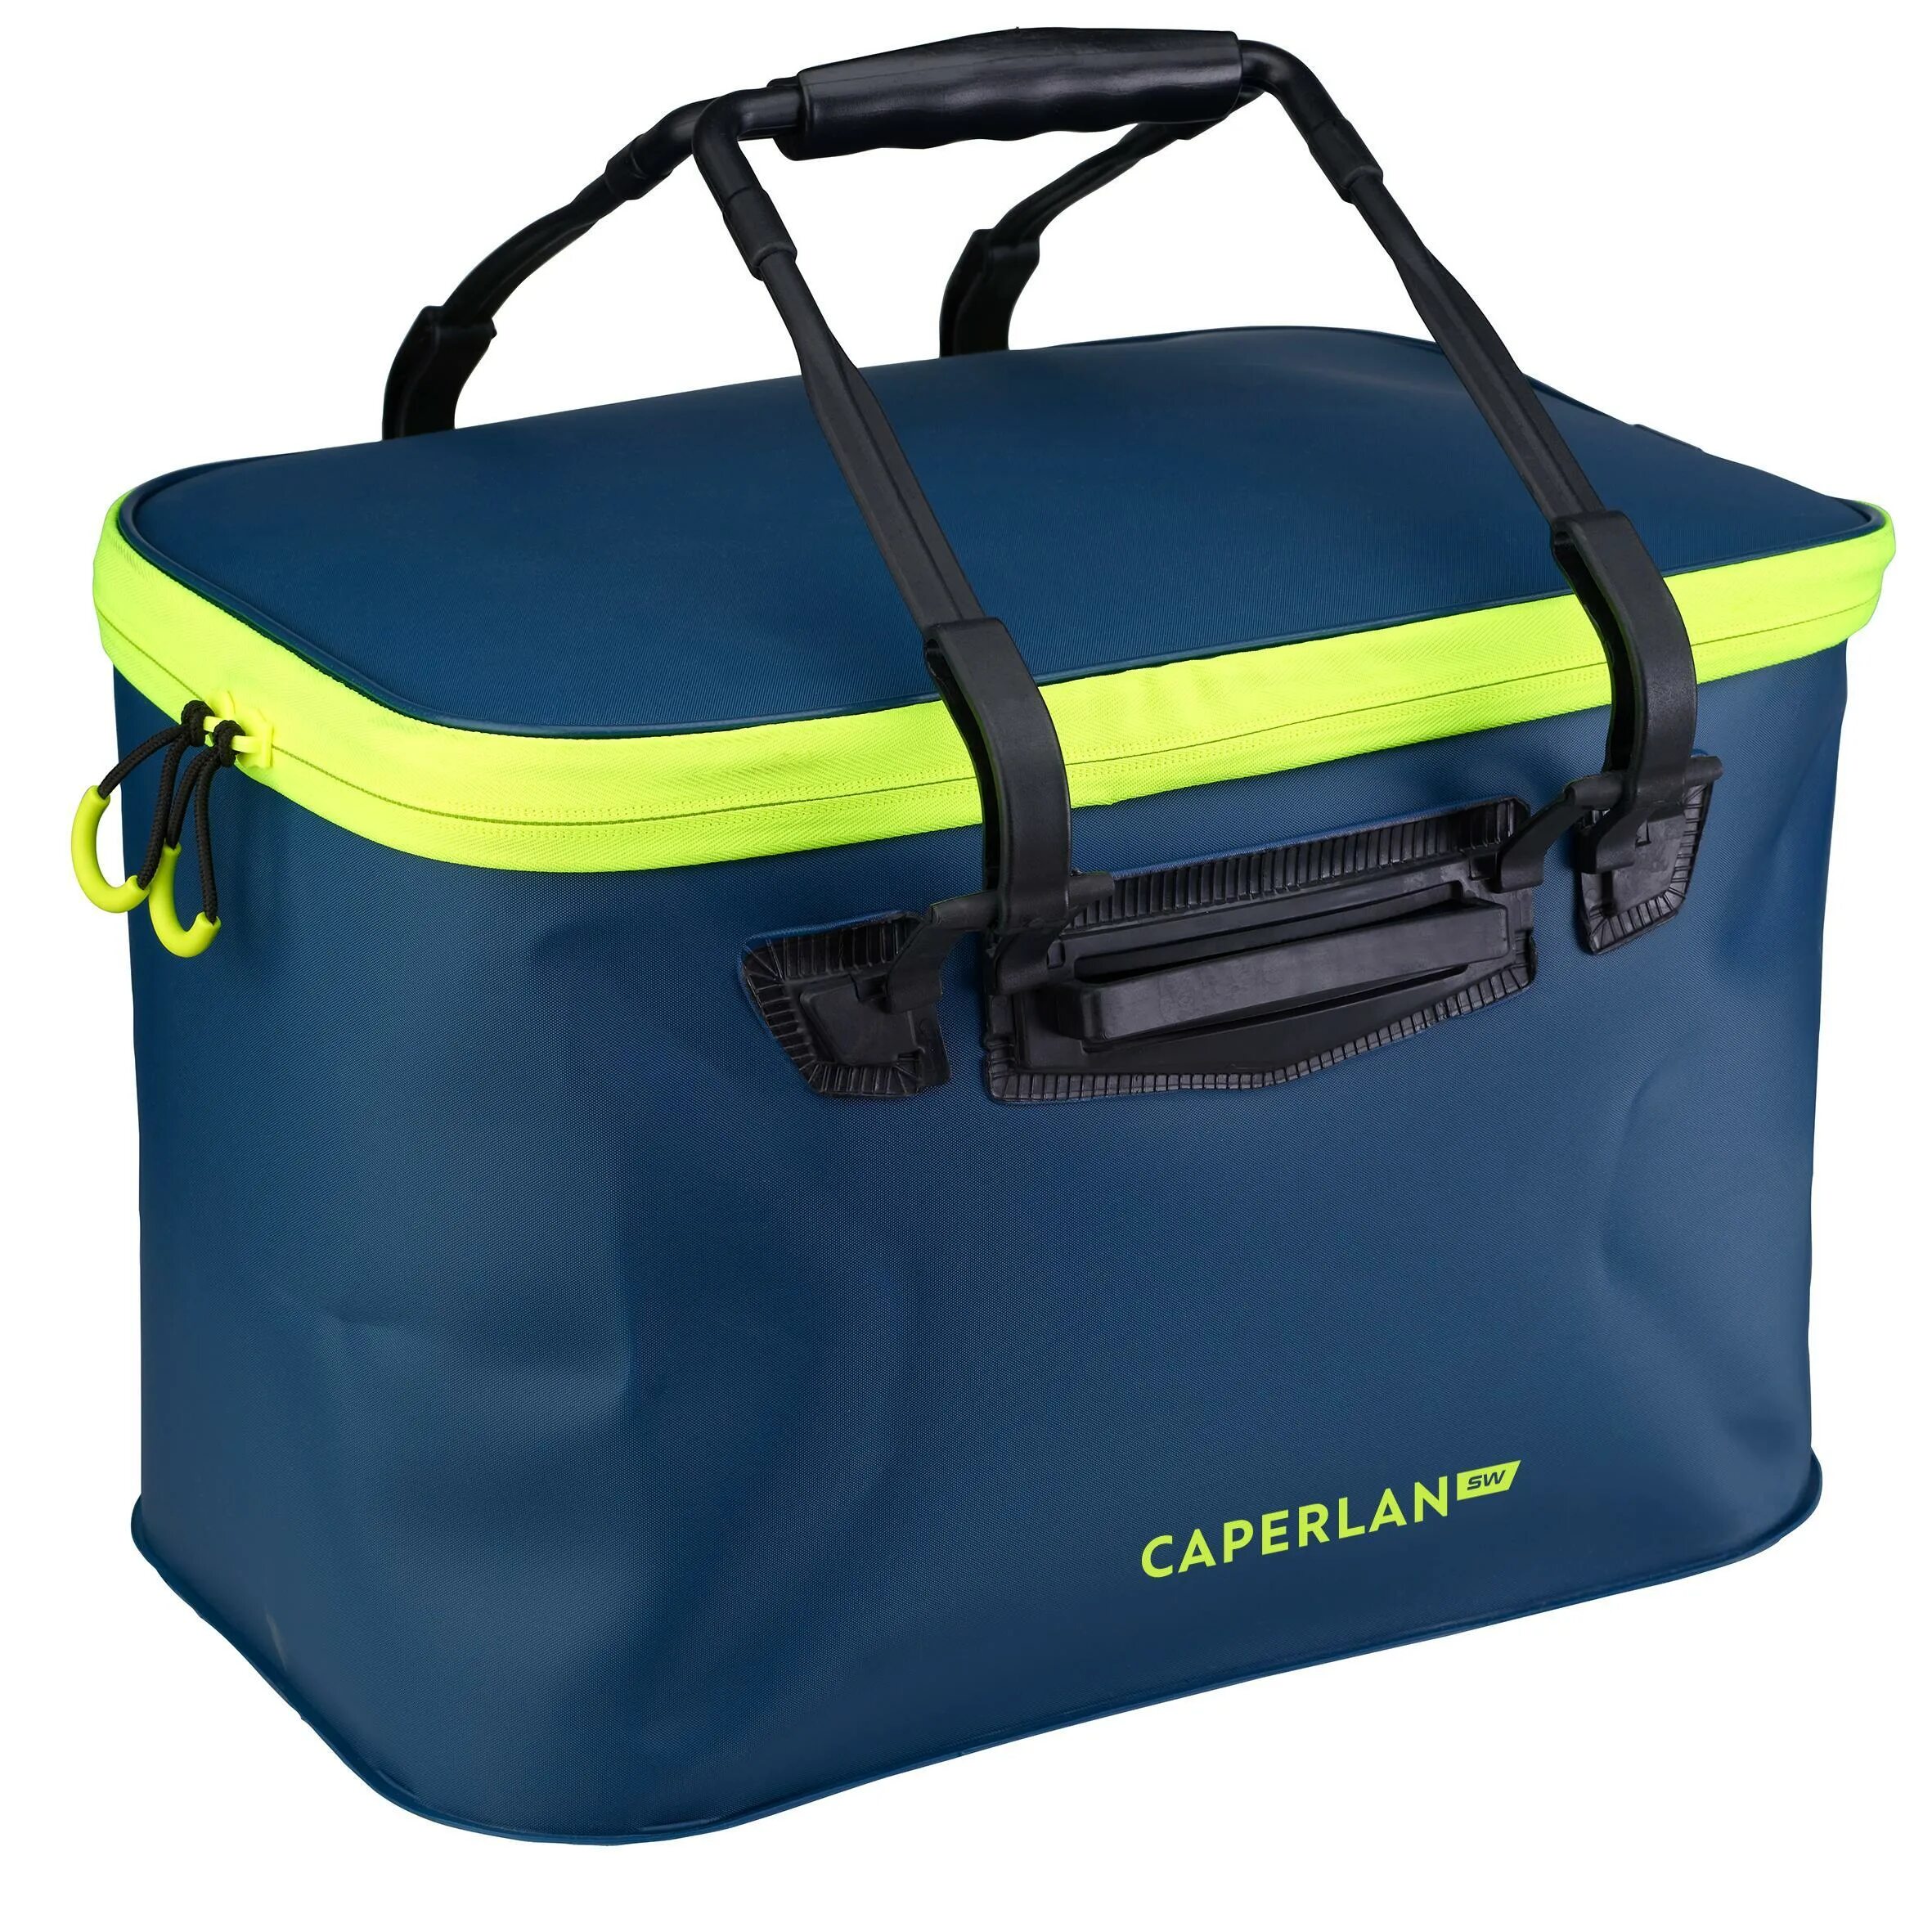 Купить сумку для лодки. Сумка CAPERLAN для рыбалки. Сумка каперлан Декатлон. Баккан сумка рыболовная wefox Wex-5015 -Black/Green, Eva 33 40 х25х29см. Рыболовная сумка Декатлон.